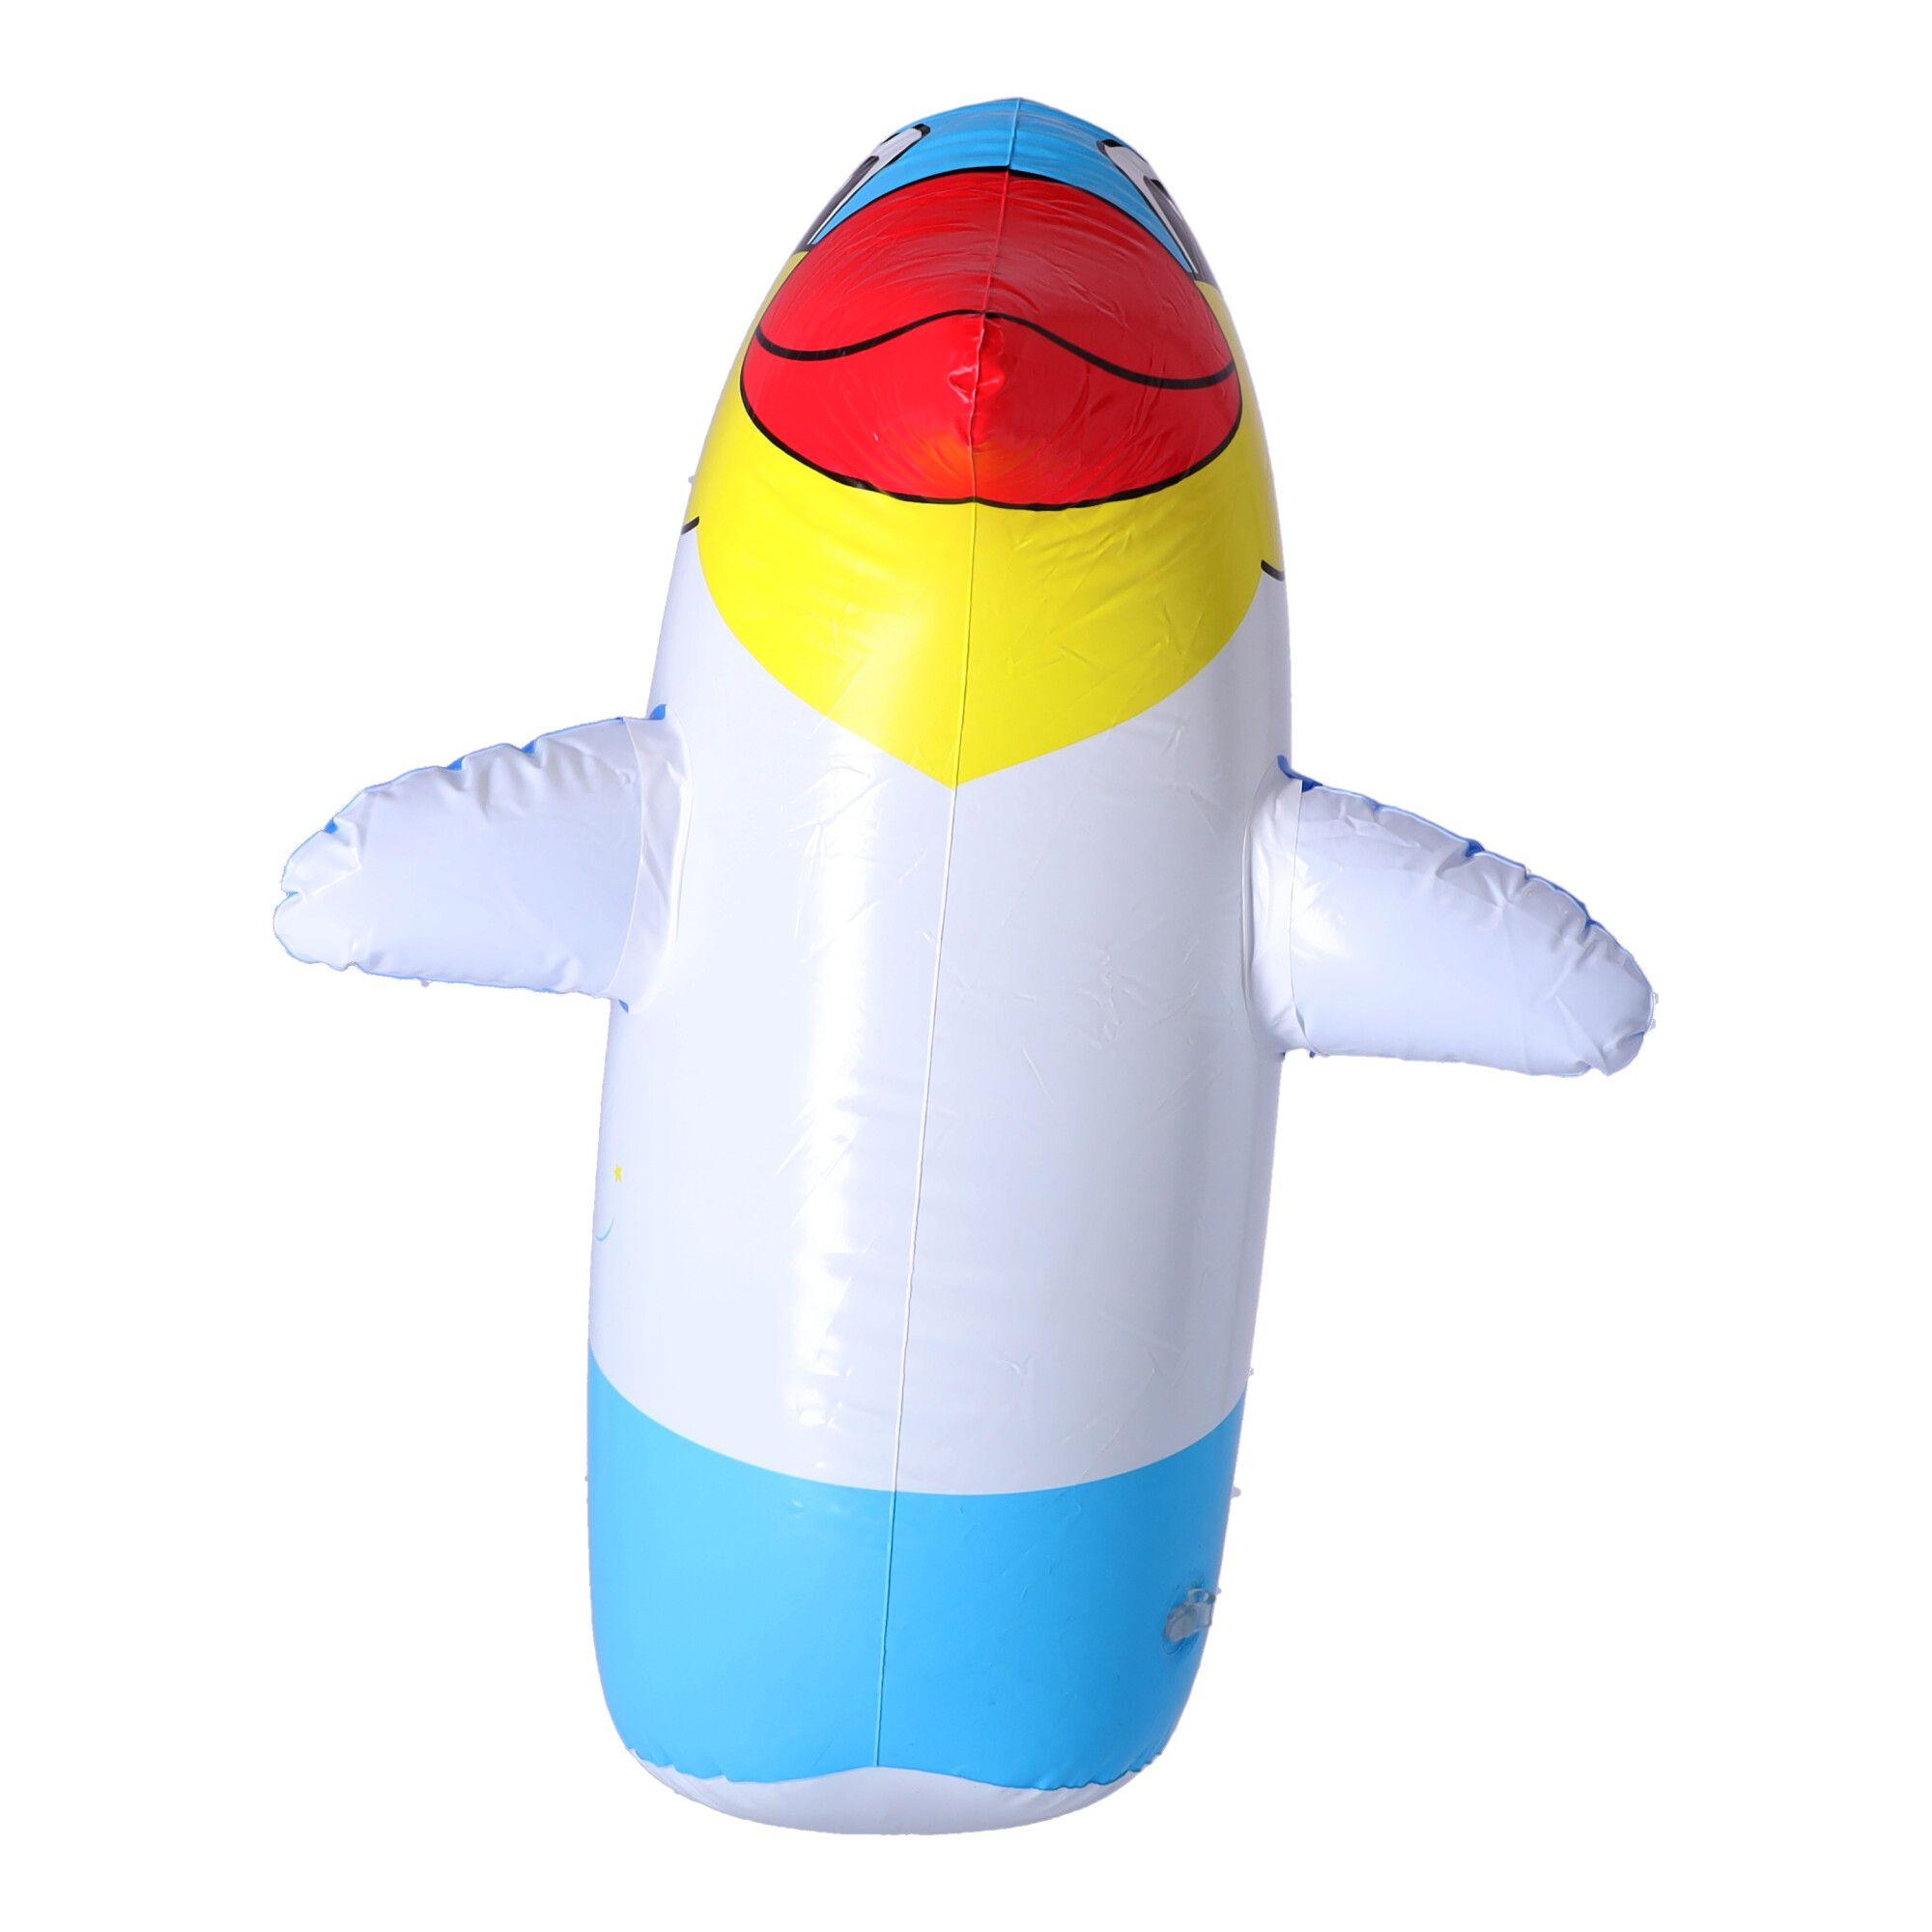 Inflatable punching bag for children, Toy for children - penguin, 45 cm.